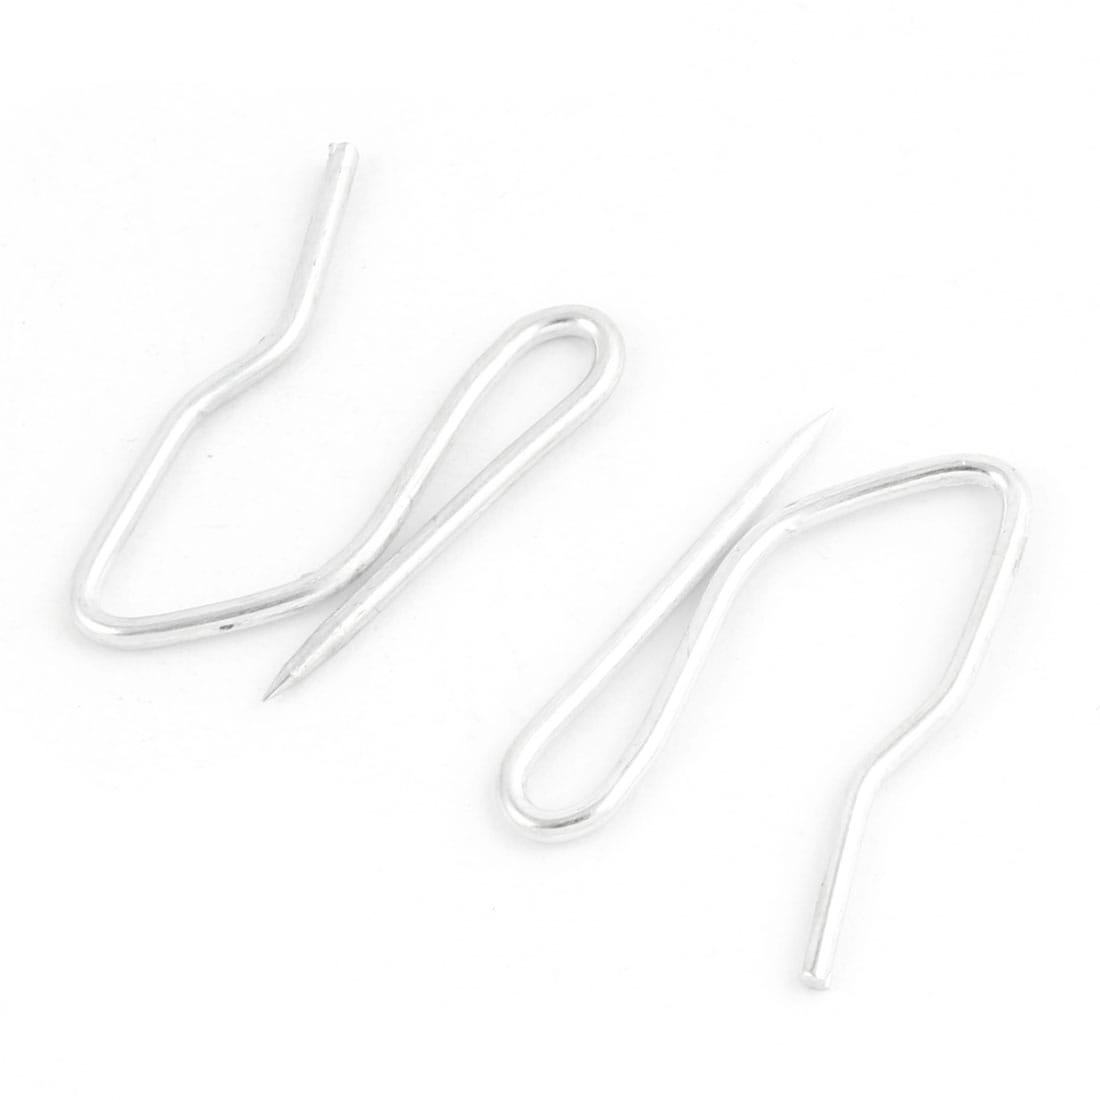 Stainless Steel Pleat Drapes Curtain Hooks Clips 3cm x 2cm 50pcs - Silver Tone